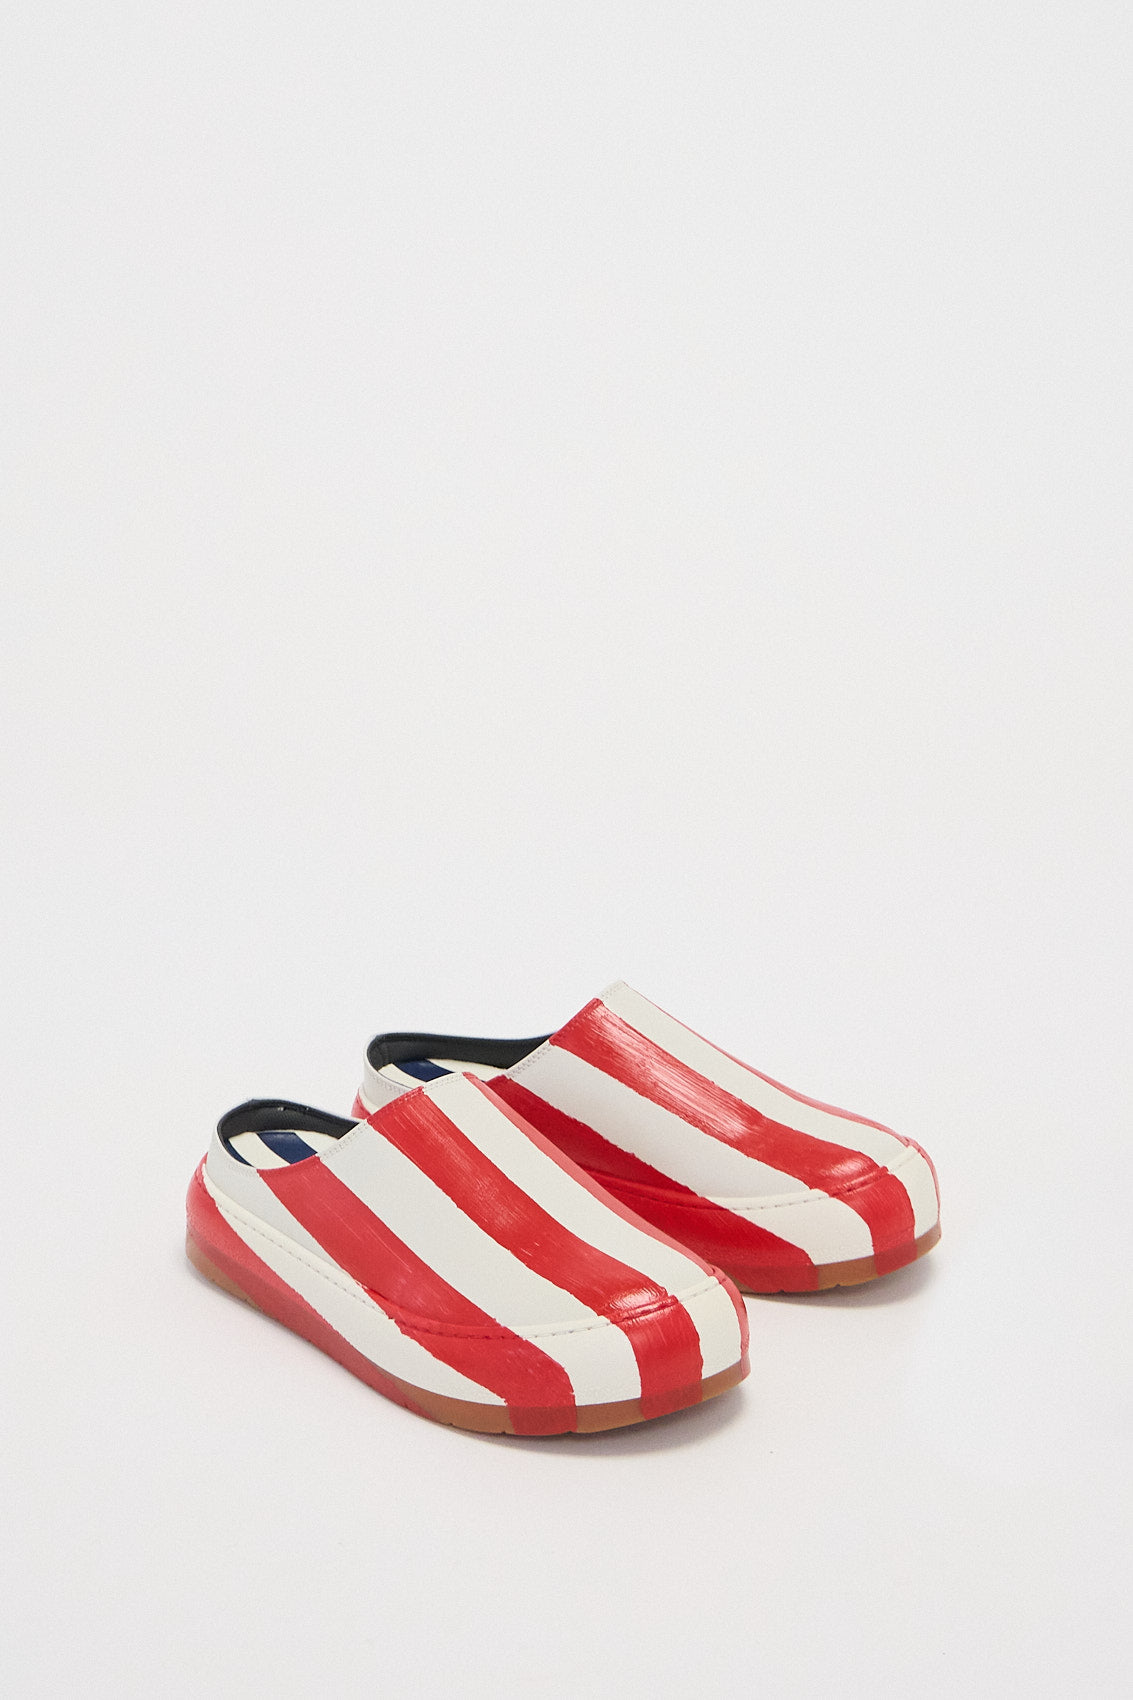 DREAMY MULE / red & white stripes